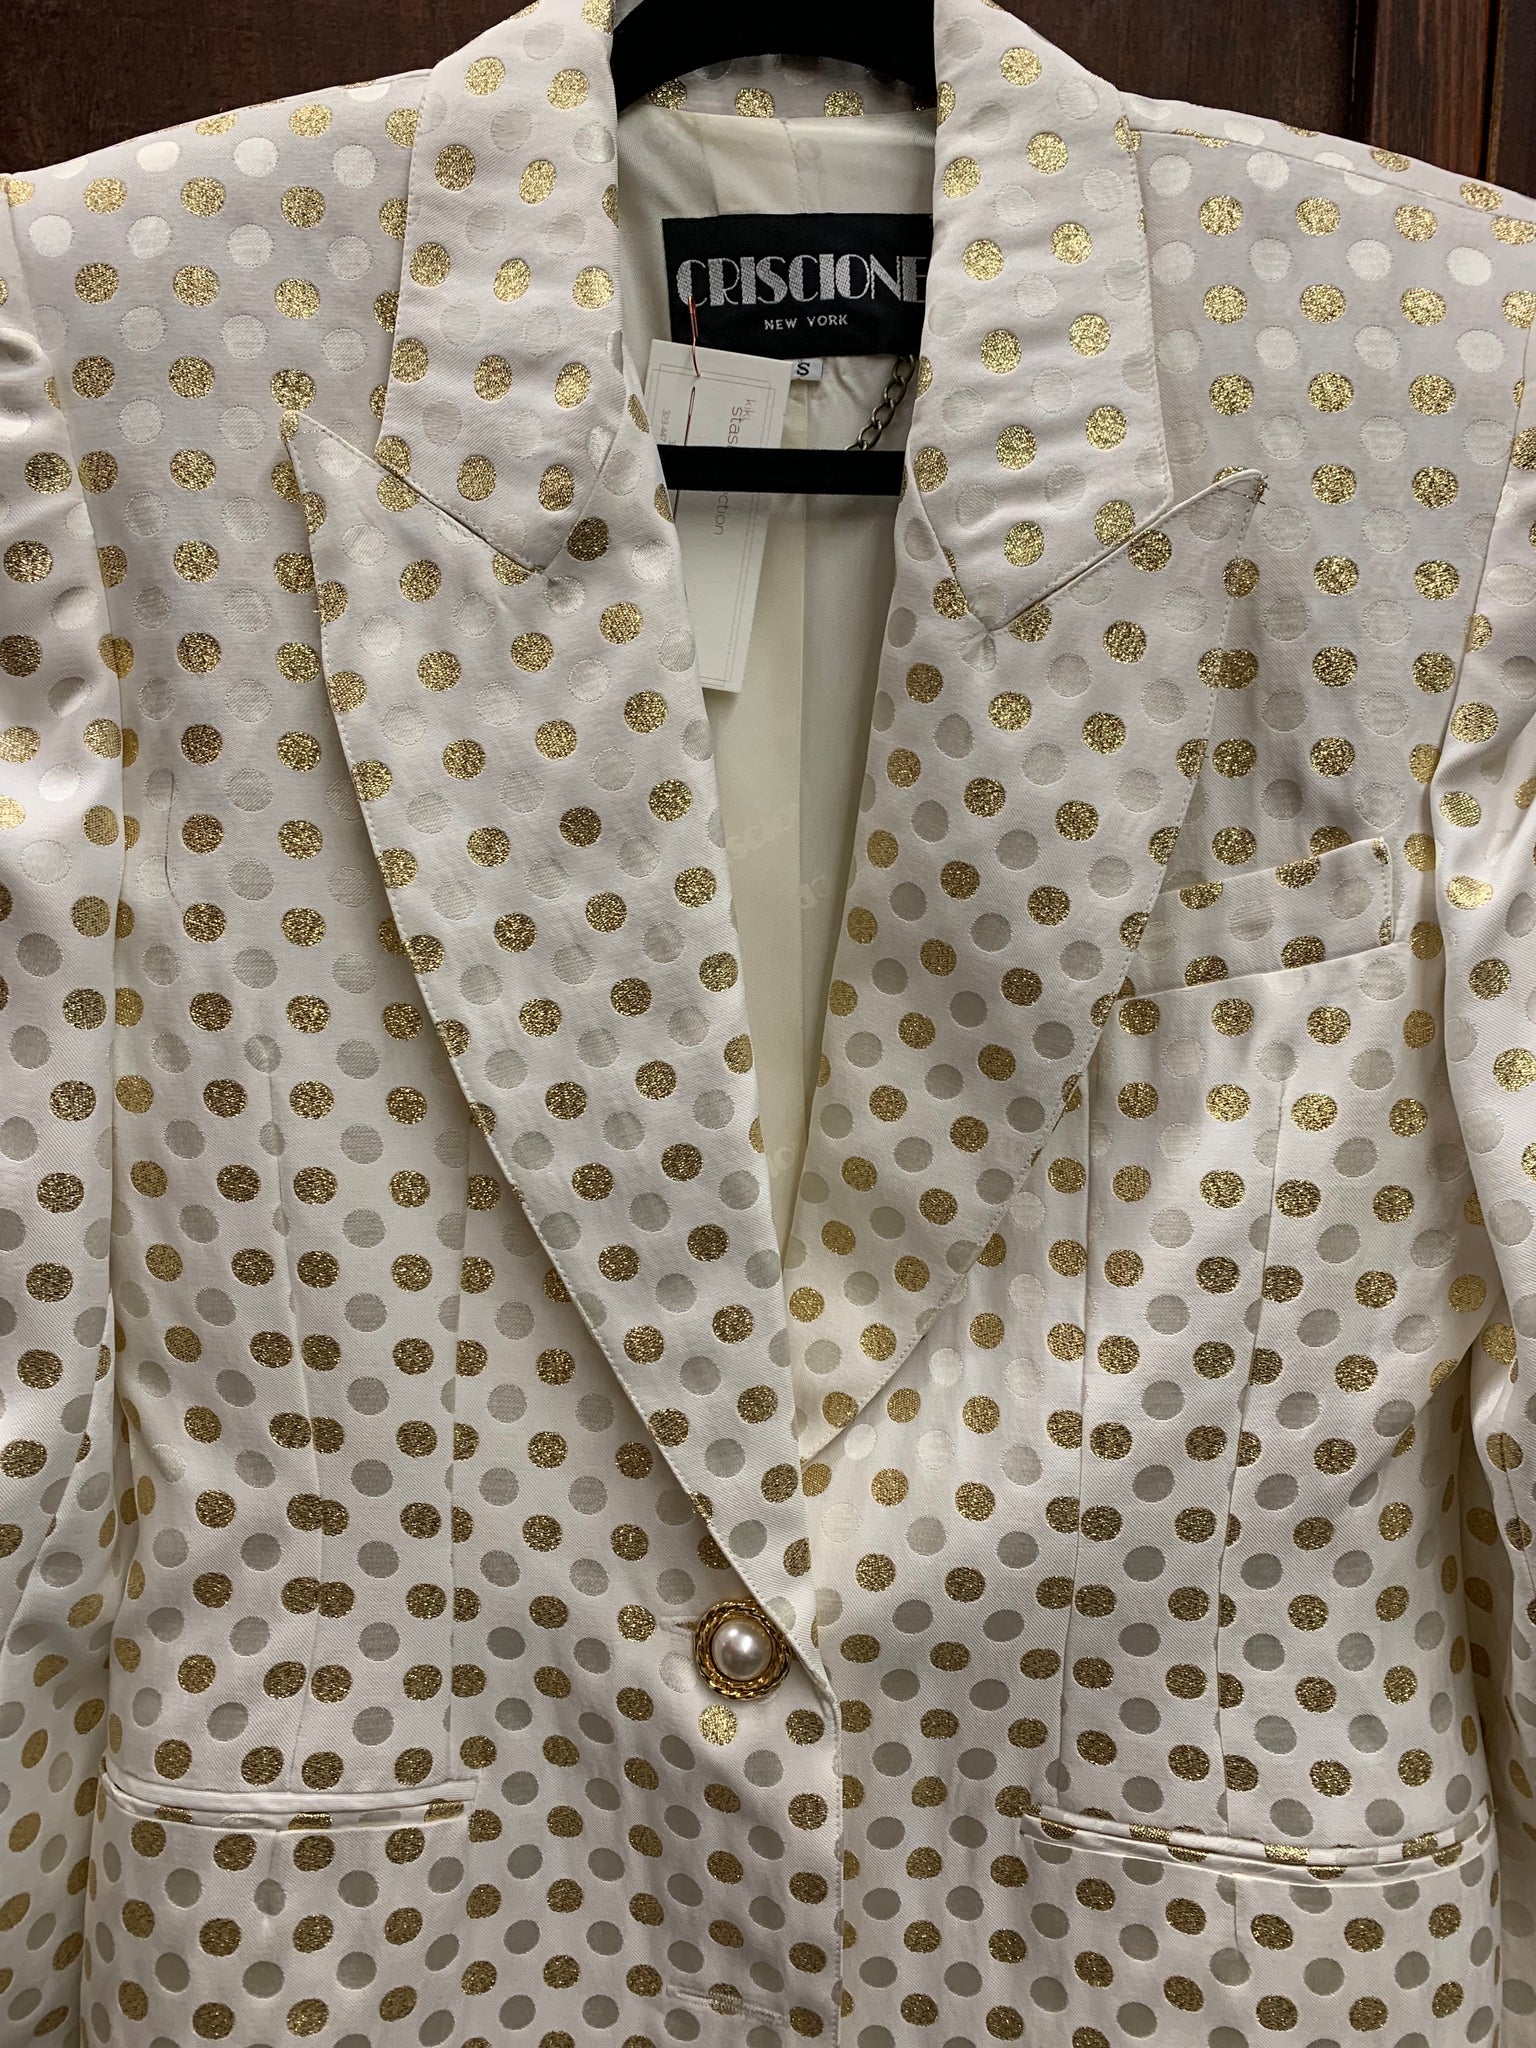 1980s 2 PIECE- Criscone skirt set white w/ gold polka dots